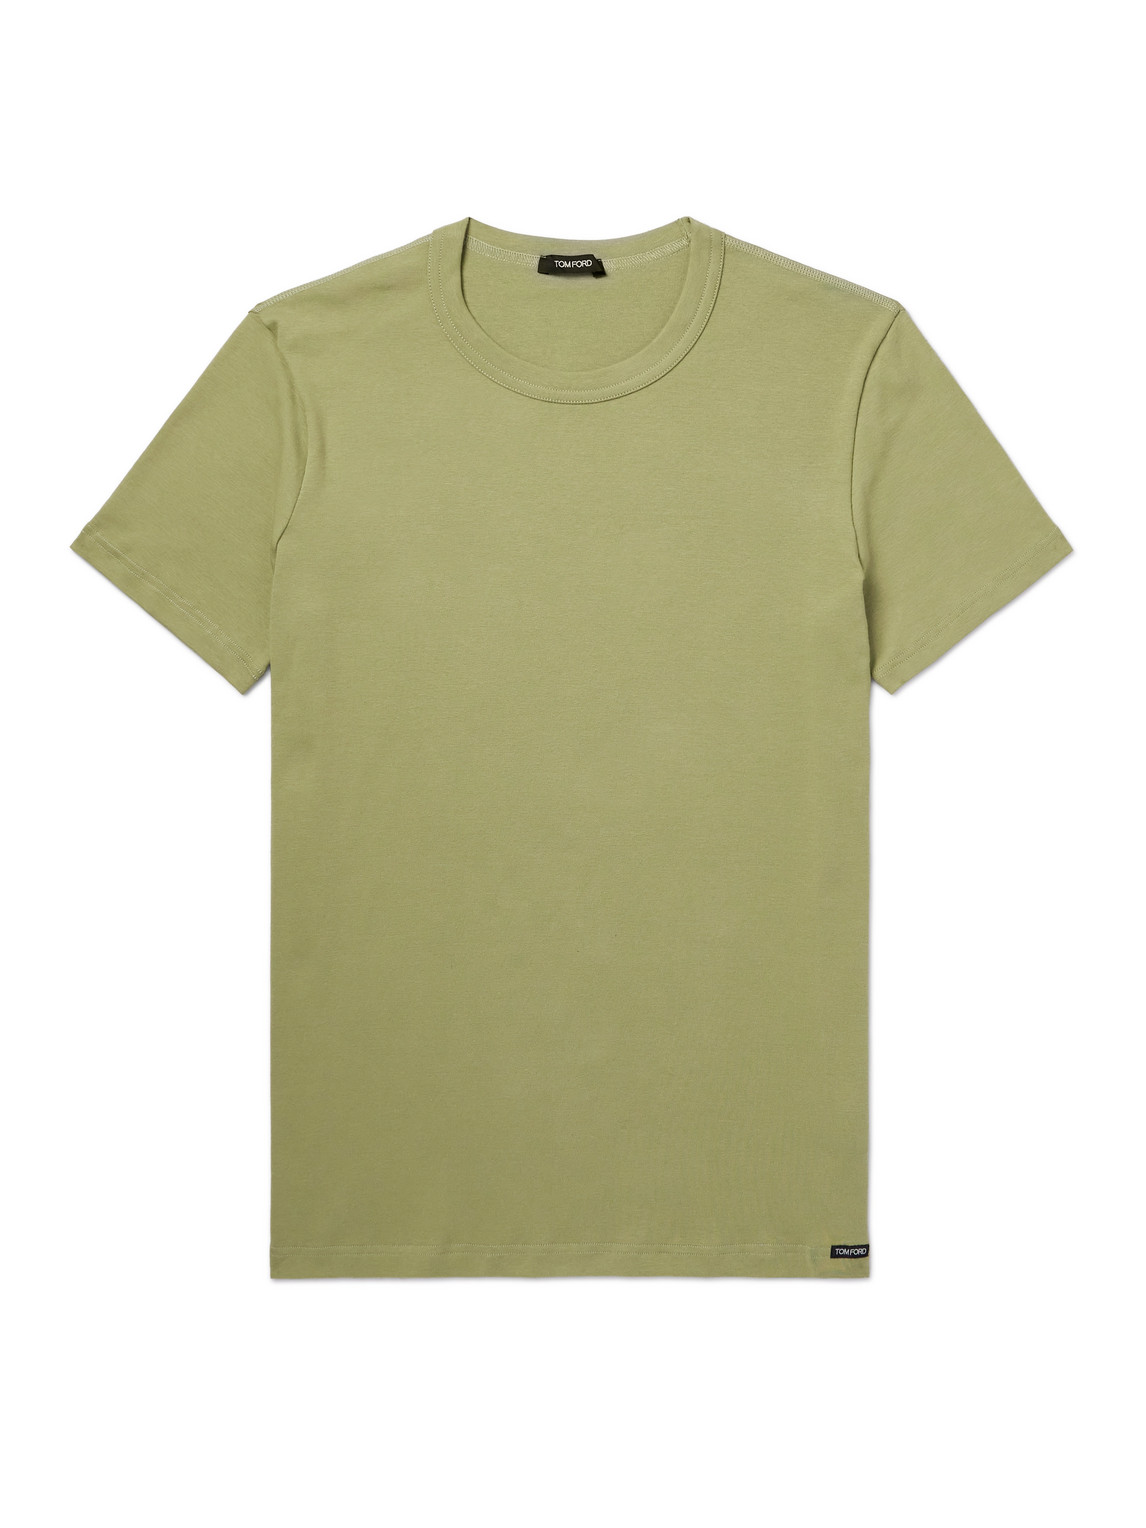 Slim-Fit Stretch-Cotton Jersey T-Shirt